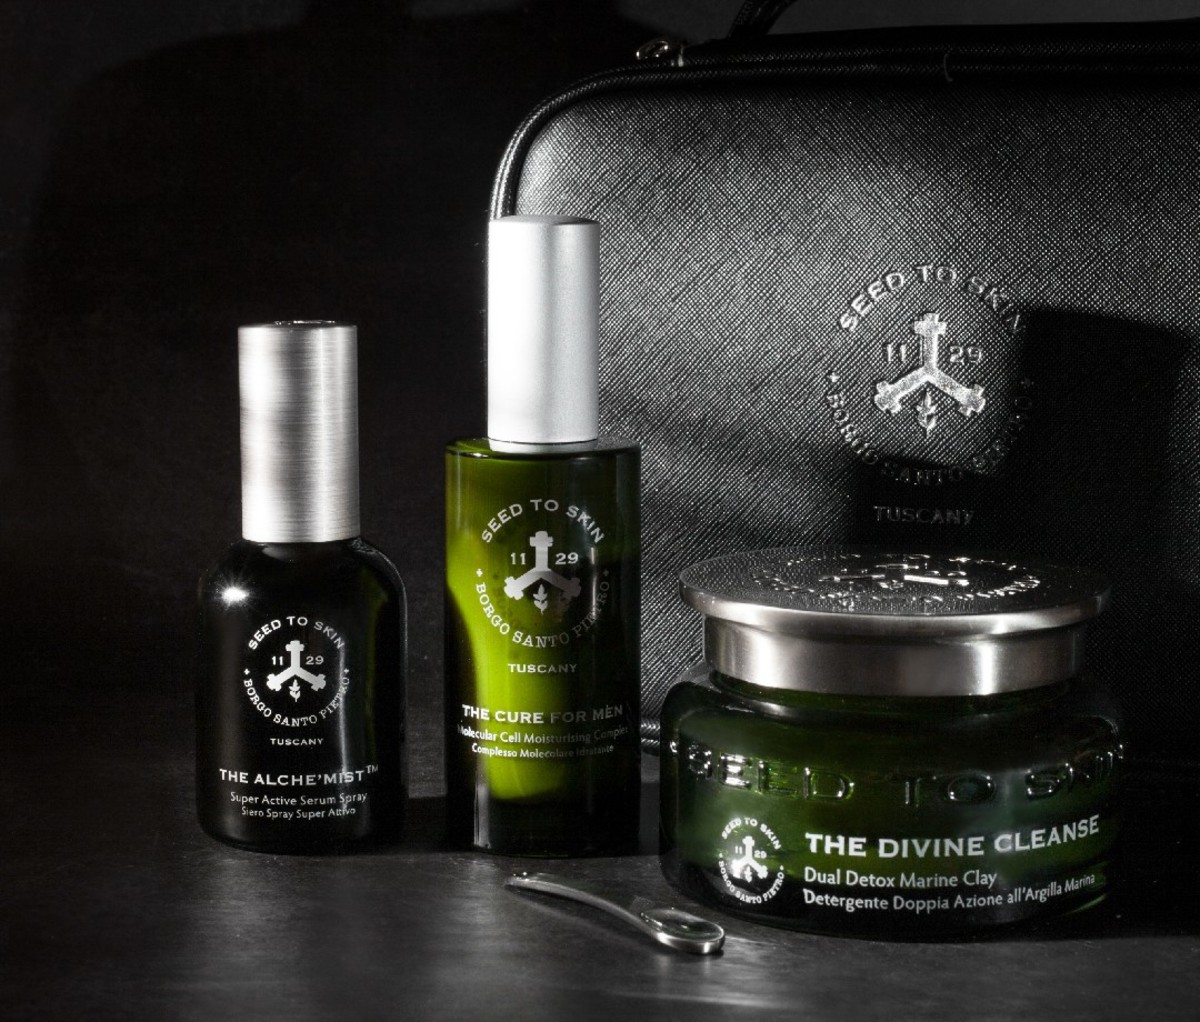 Green bottles and jars of Seed to Skin's Men's Green Ritual Kit